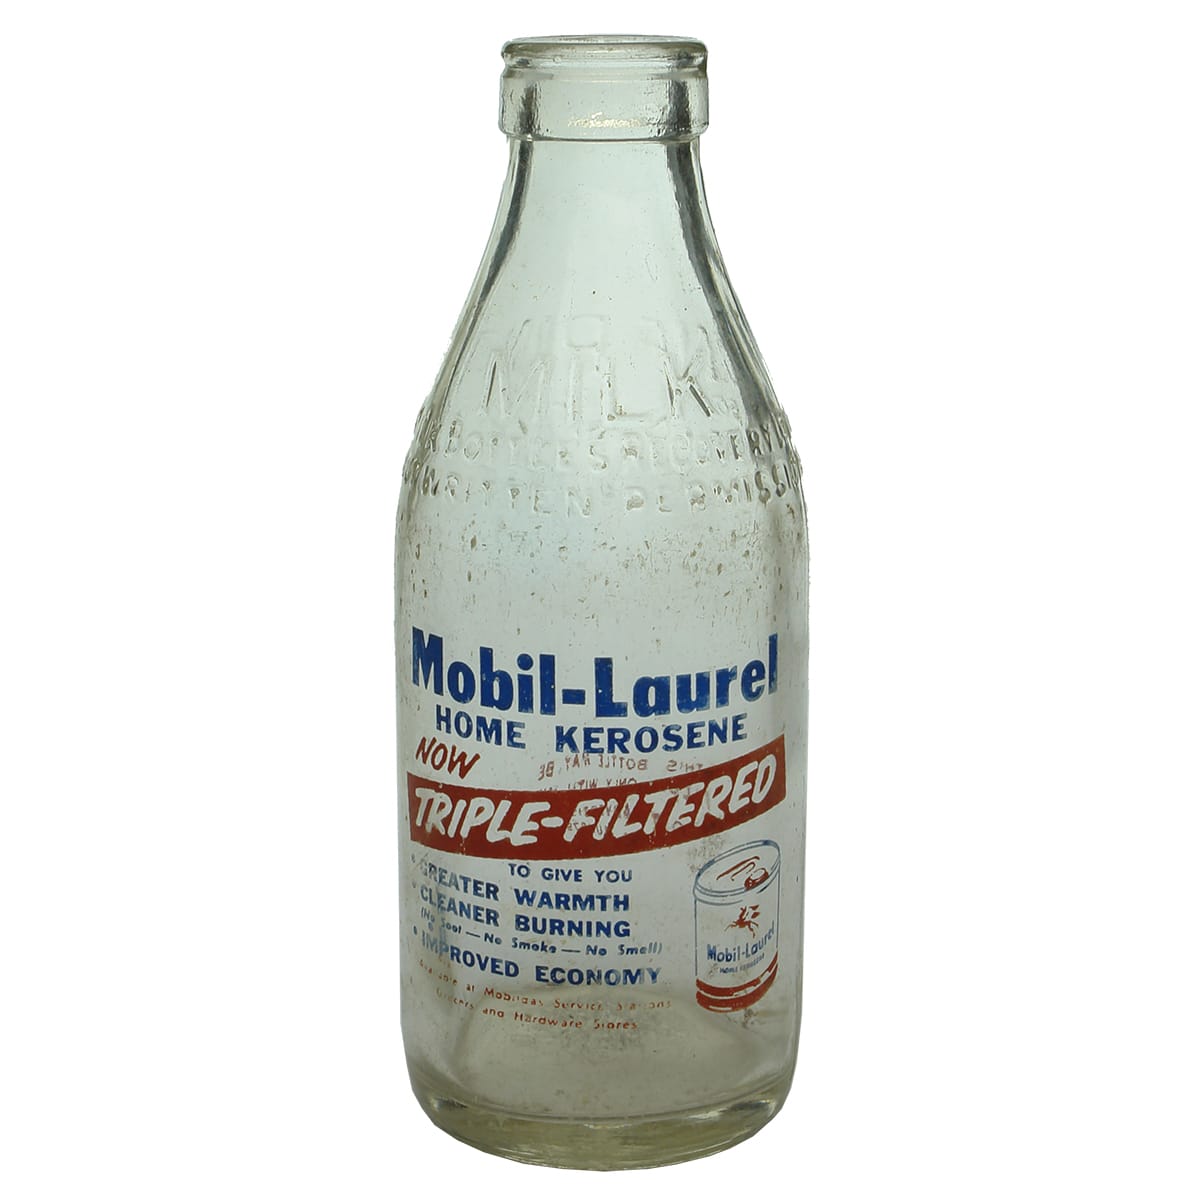 Milk. Mobil-Laurel Home Kerosene. Foil Top. Blue and red print. 1 Pint. (Victoria)